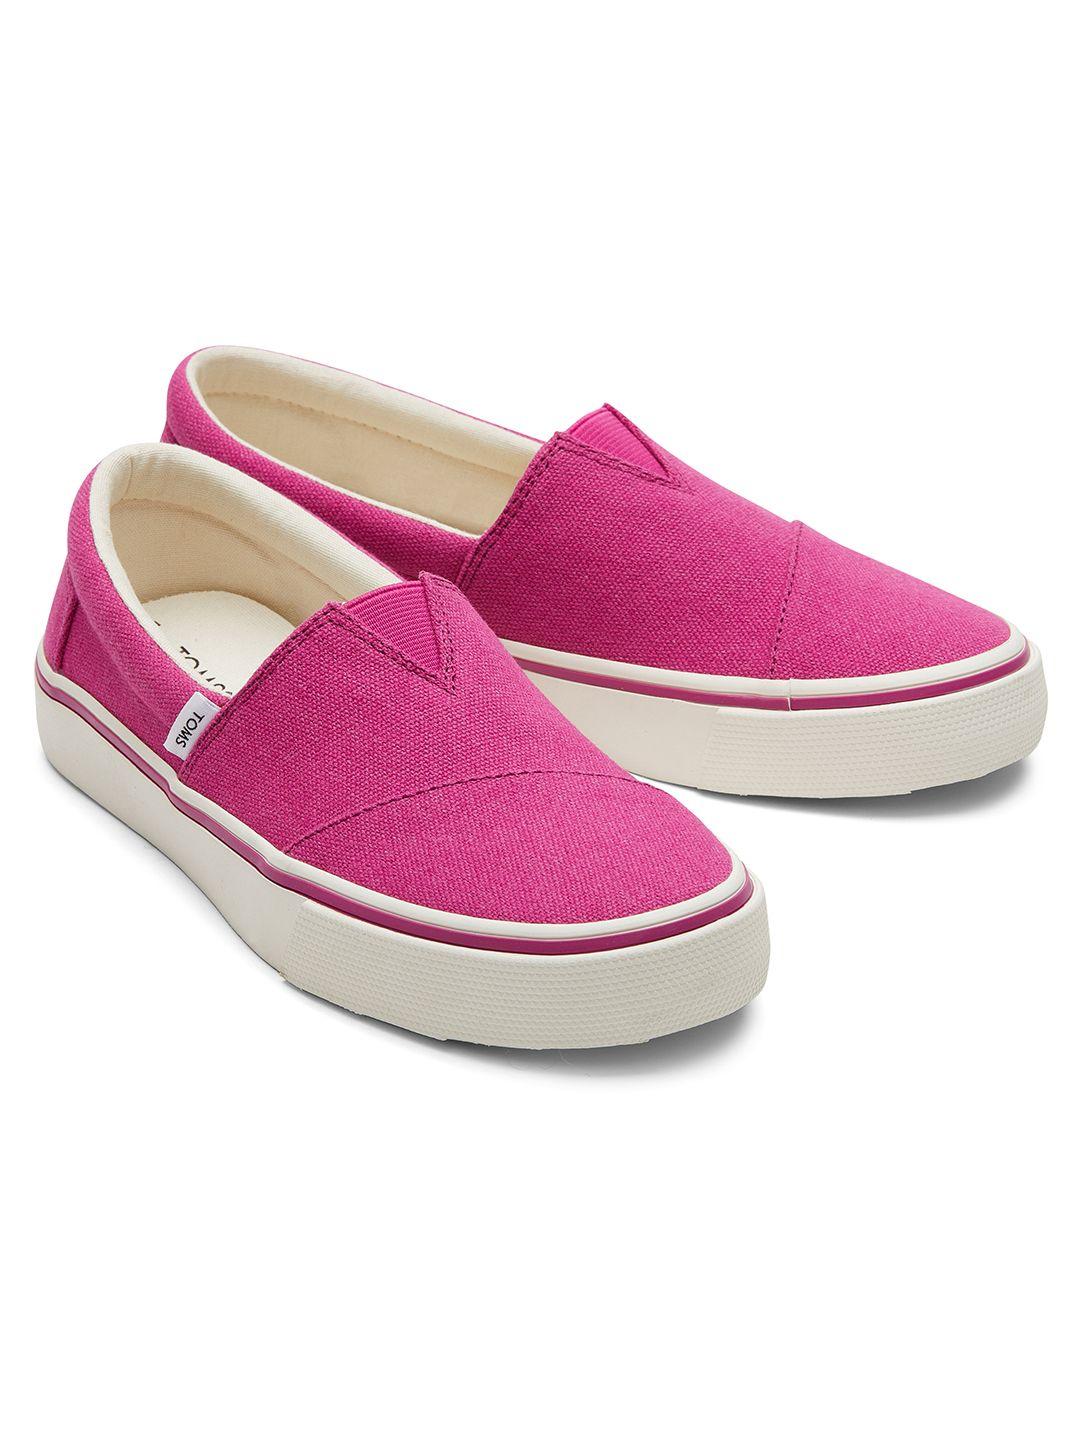 toms-women-pink-slip-on-sneakers